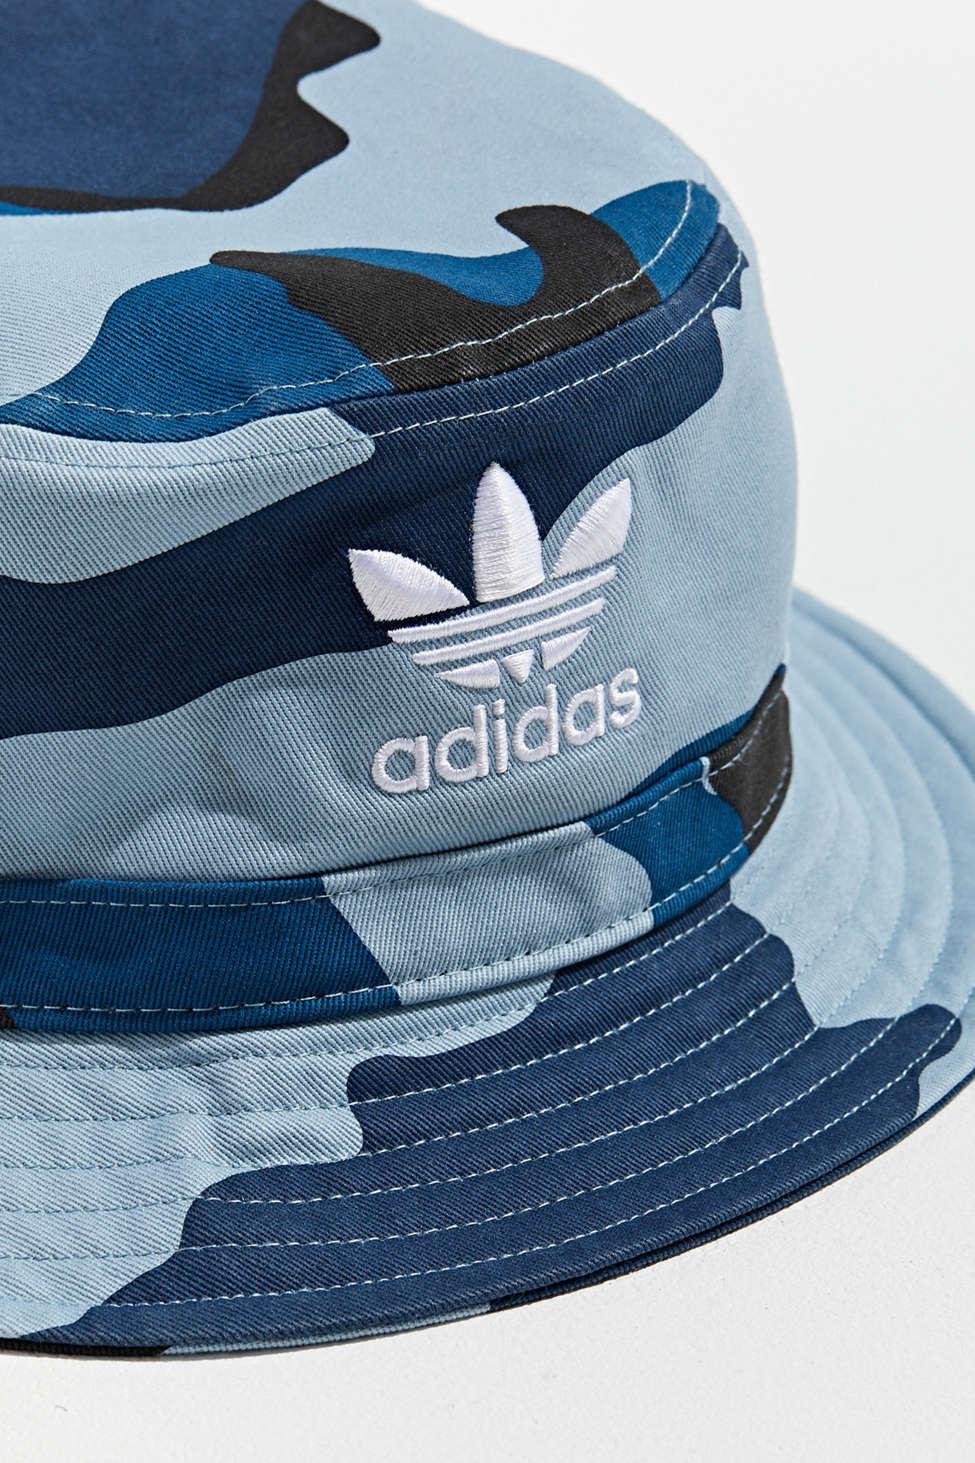 adidas Cotton Adidas Originals Camo Bucket Hat in Blue for Men - Lyst